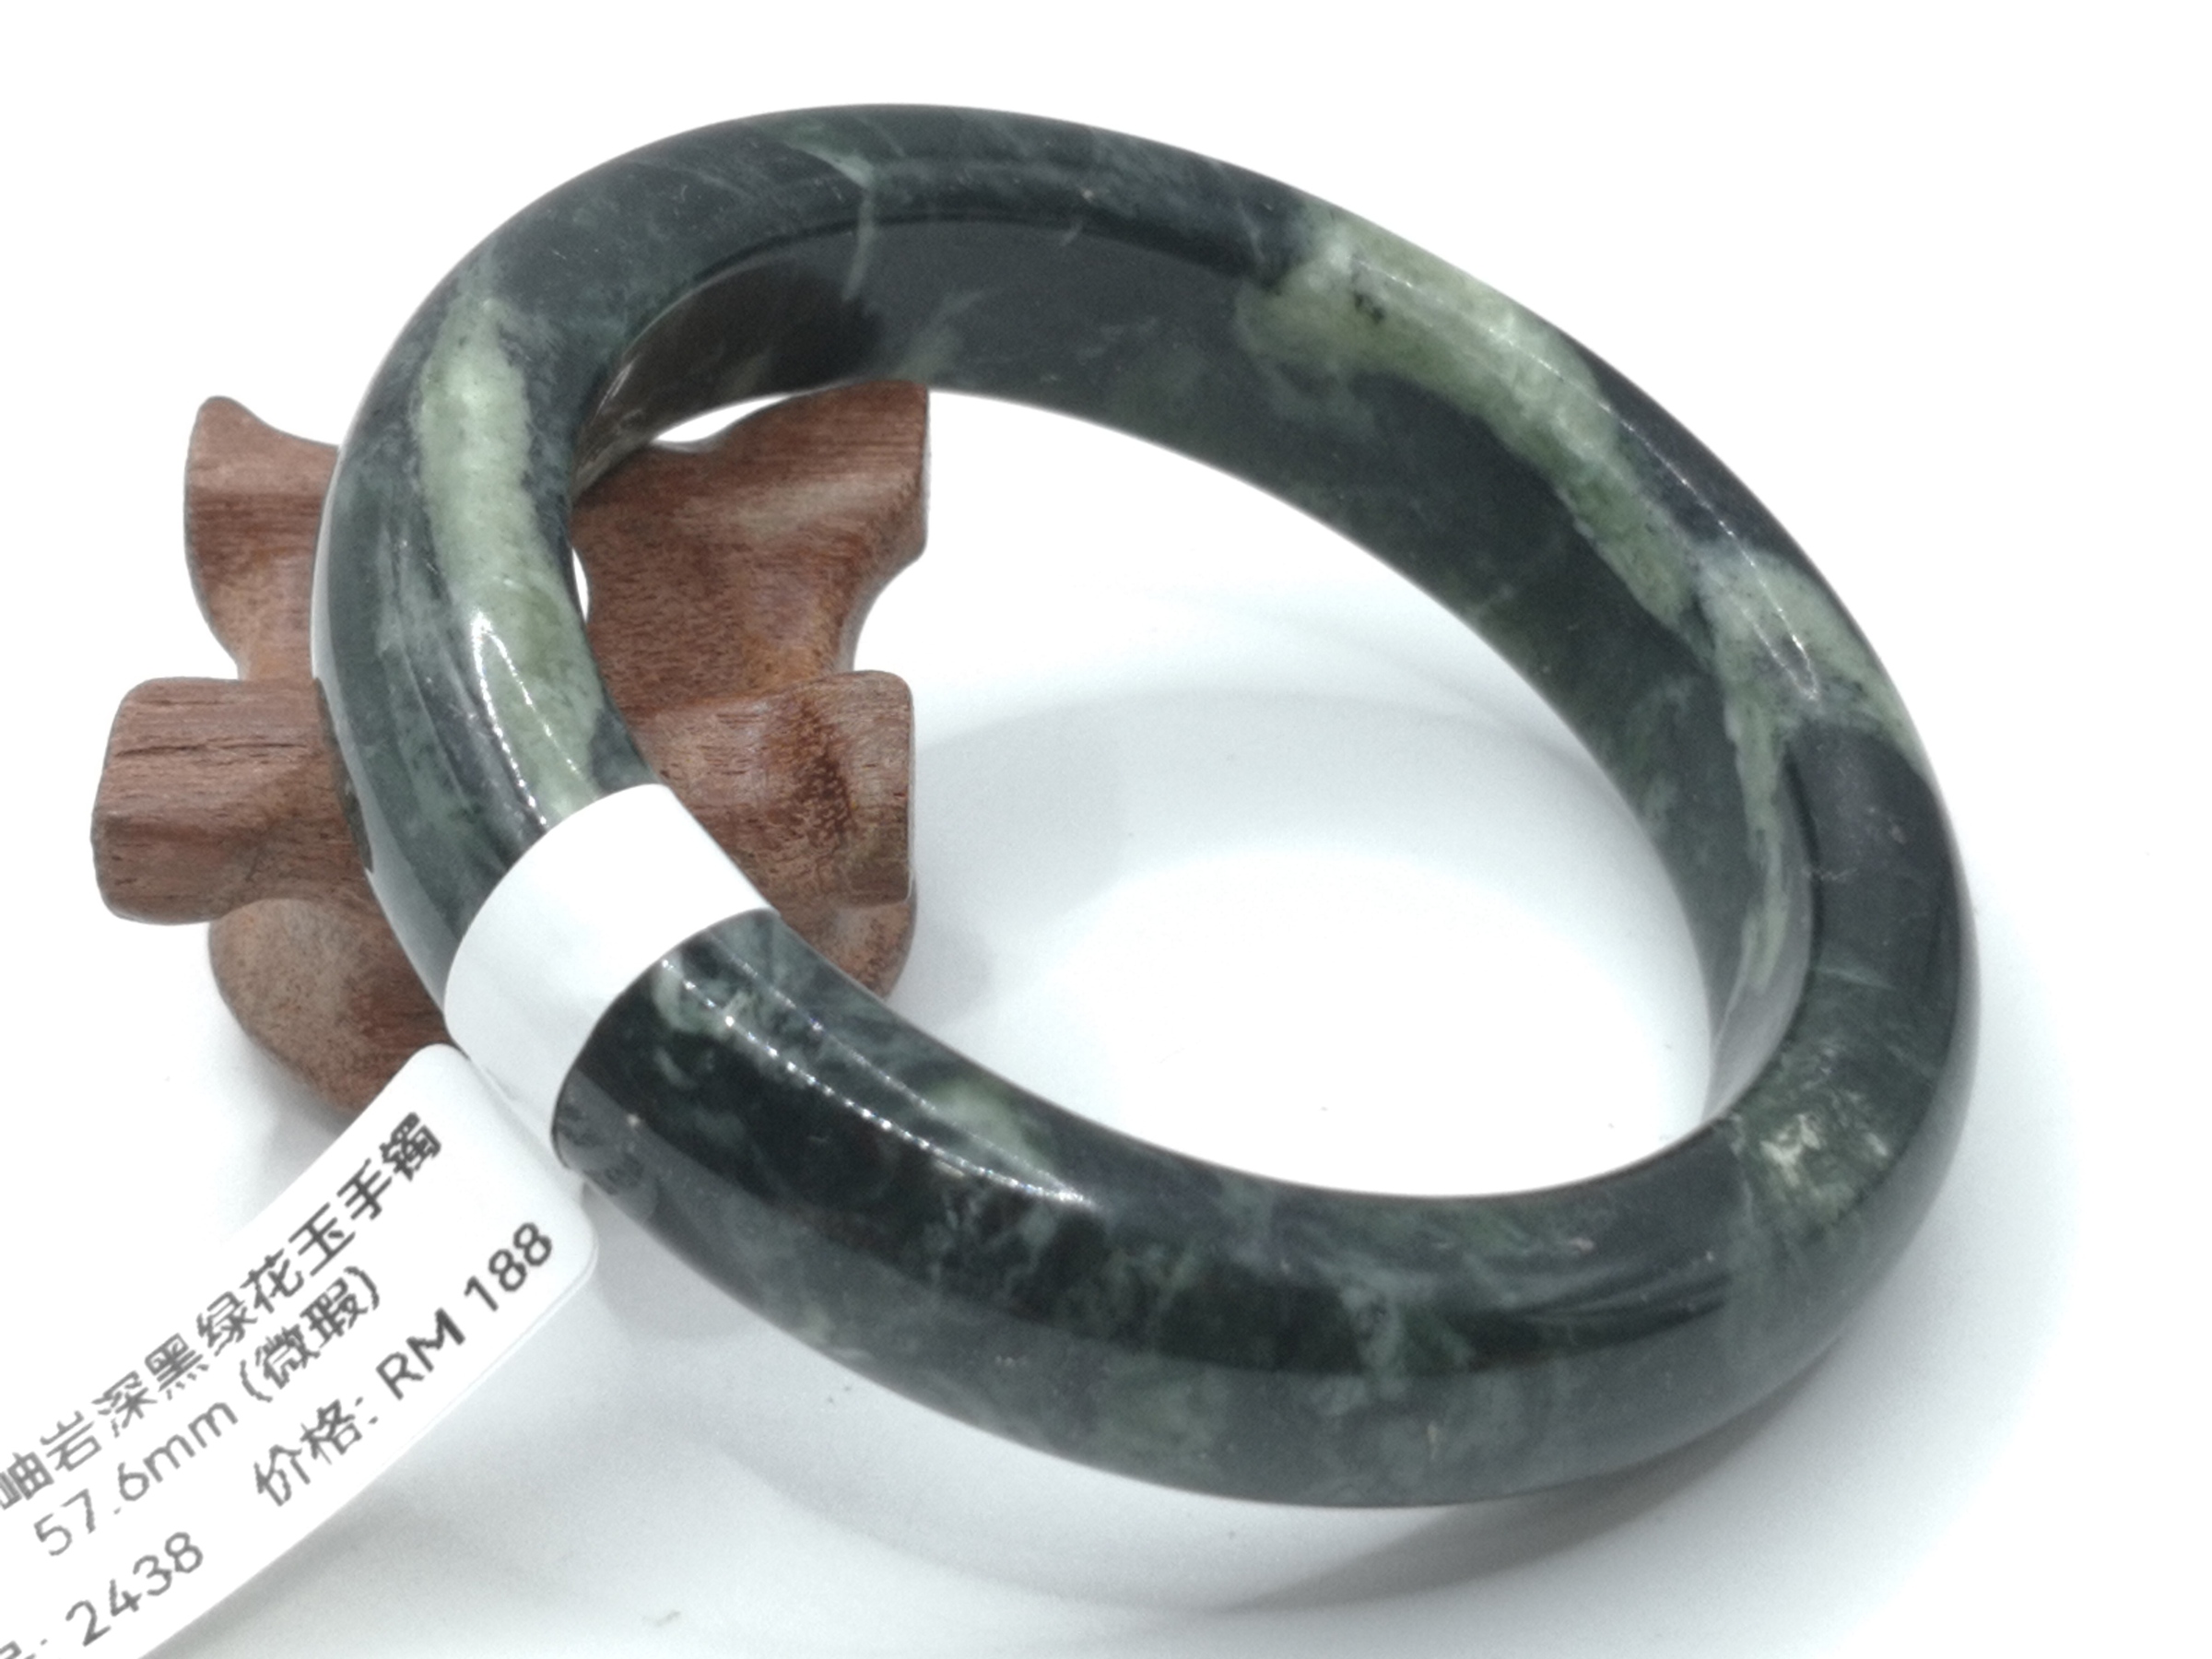 🍀 B2438 - Natural Serpentine Jade Bangle 57mm (Slightly flawed) 天然岫岩深黑绿花玉手镯 57mm (微瑕)